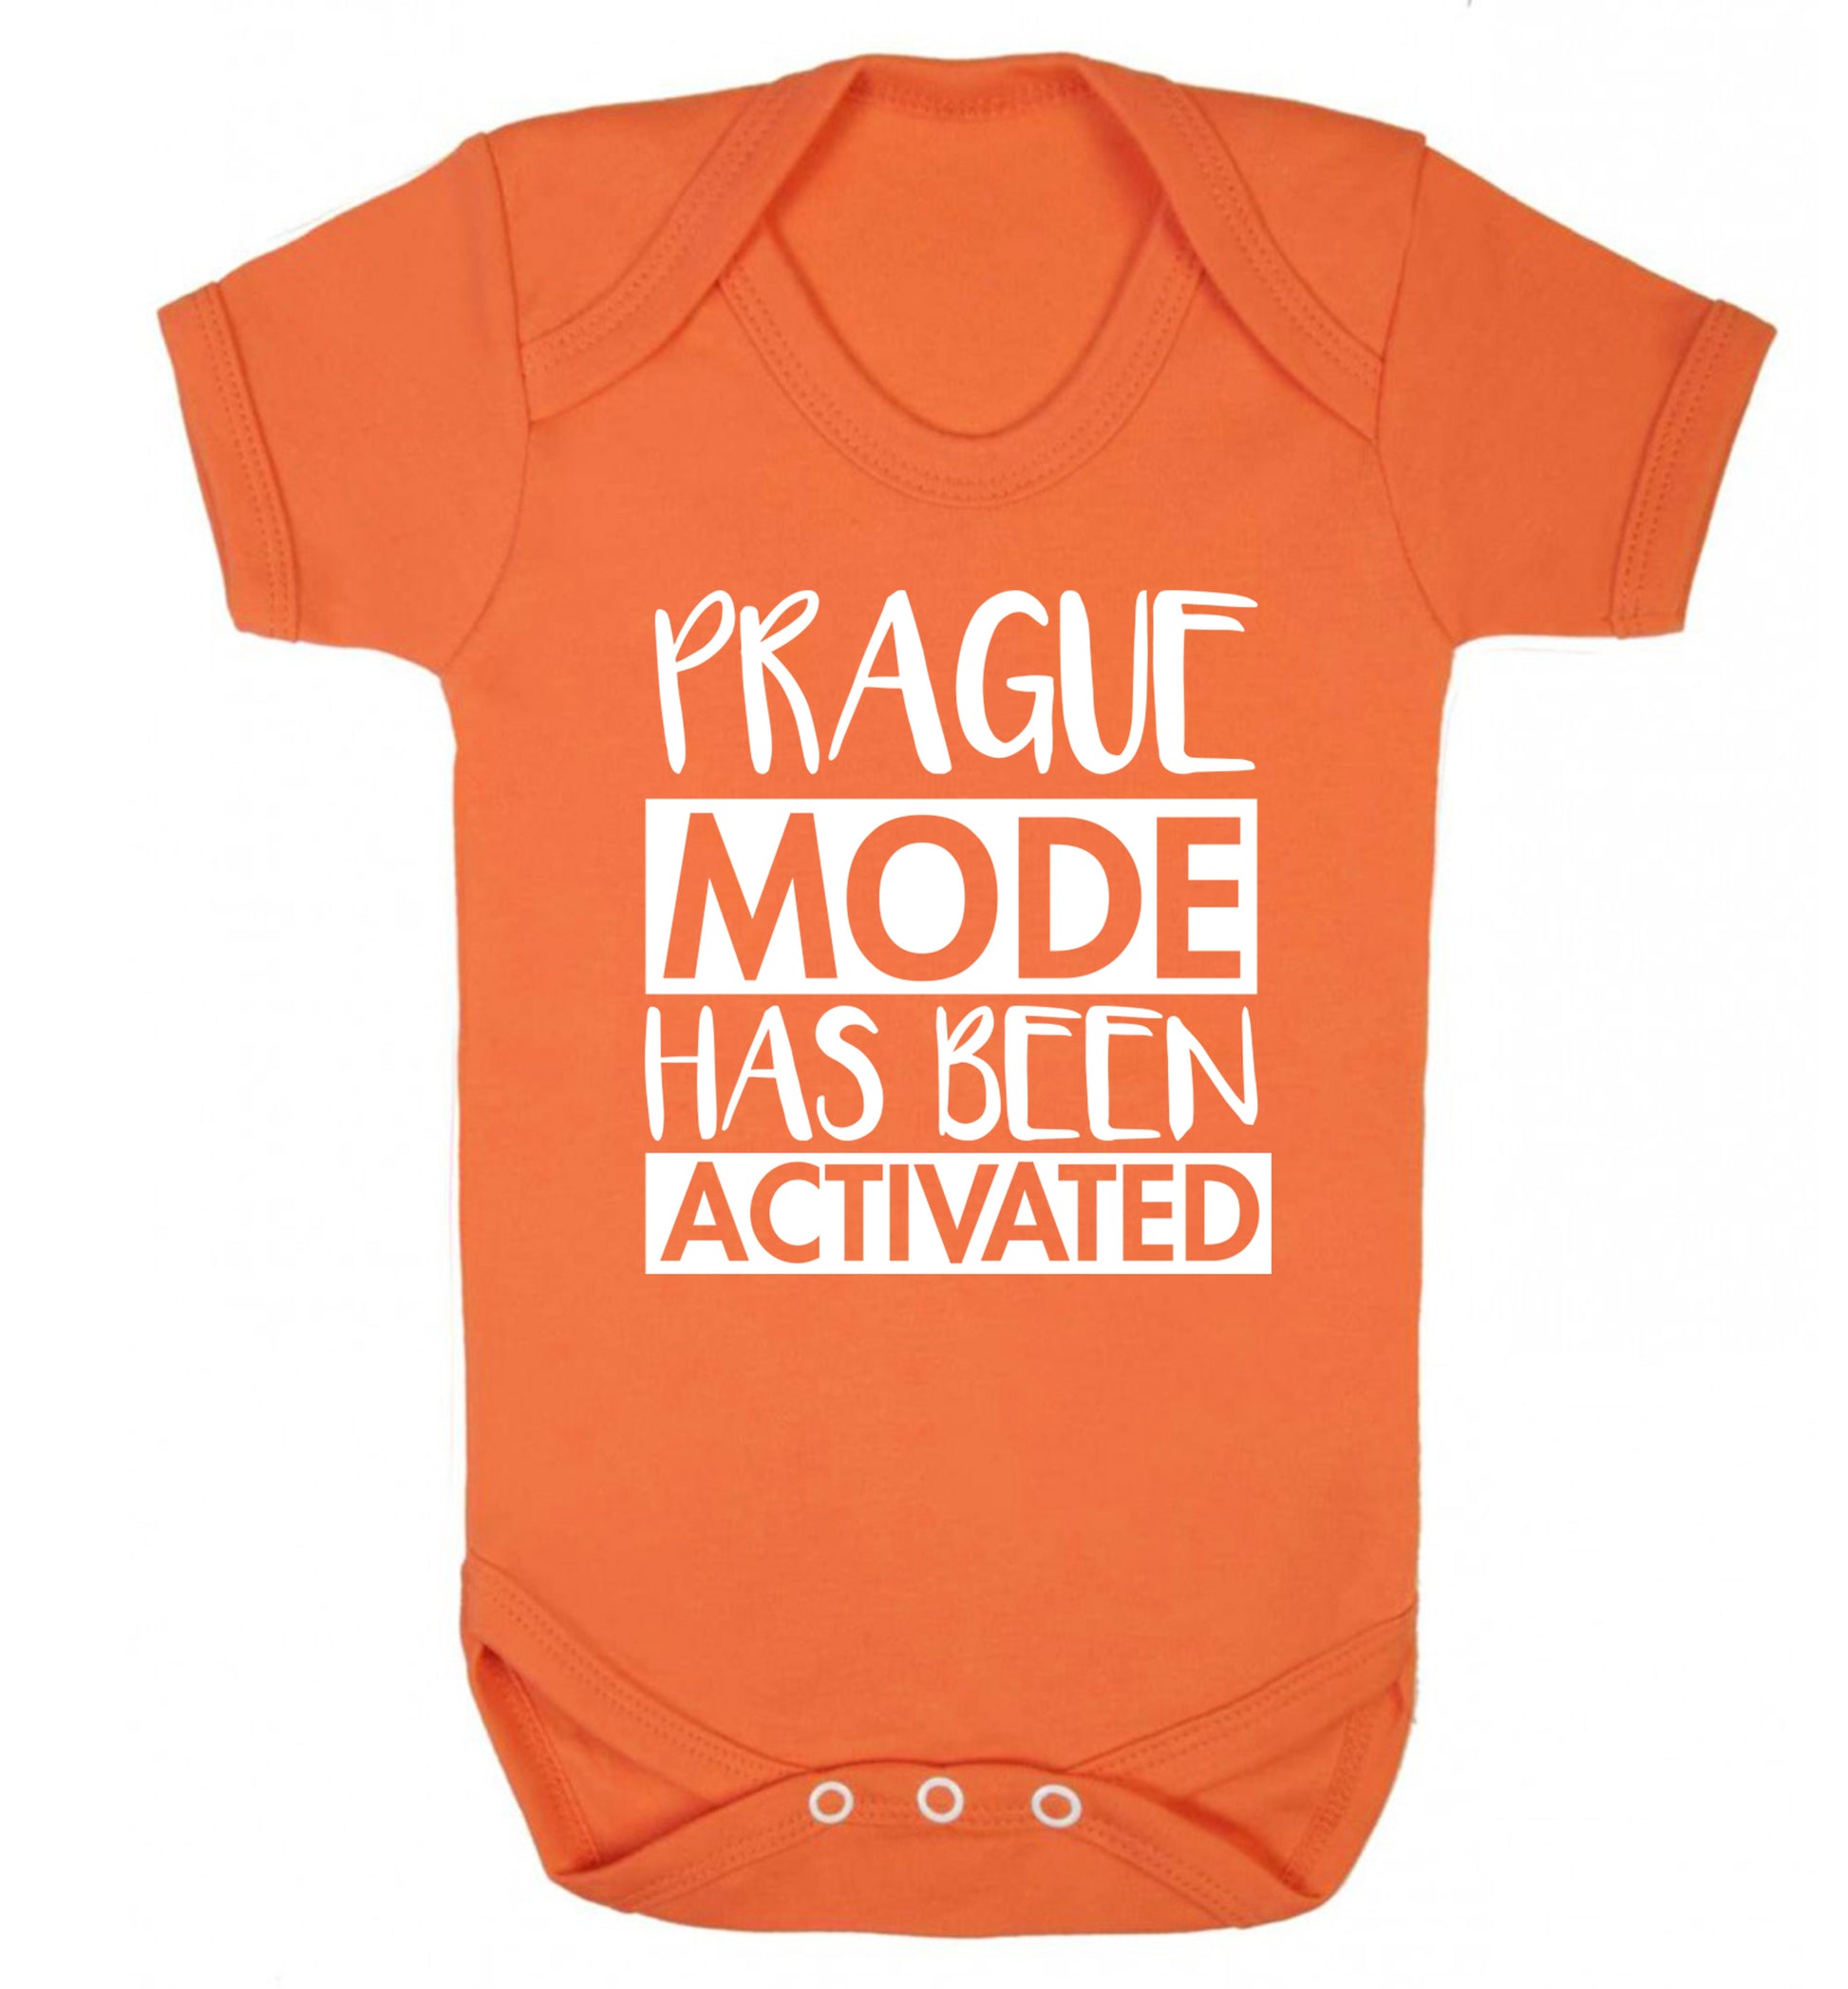 Prague mode has been activated Baby Vest orange 18-24 months